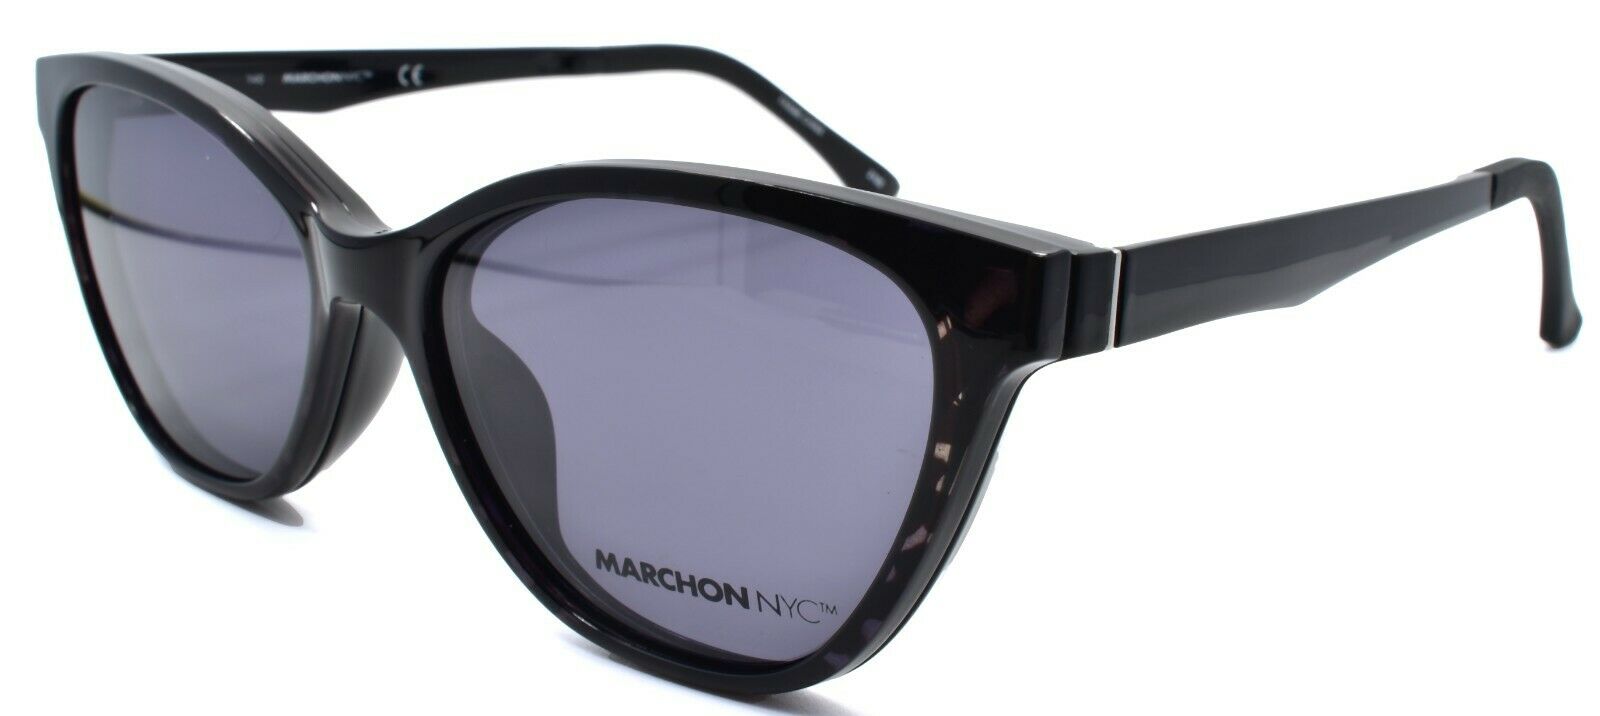 1-Marchon M-1500 001 Women's Eyeglasses 54-15-140 Black + 2 Magnetic Clip Ons-886895485838-IKSpecs